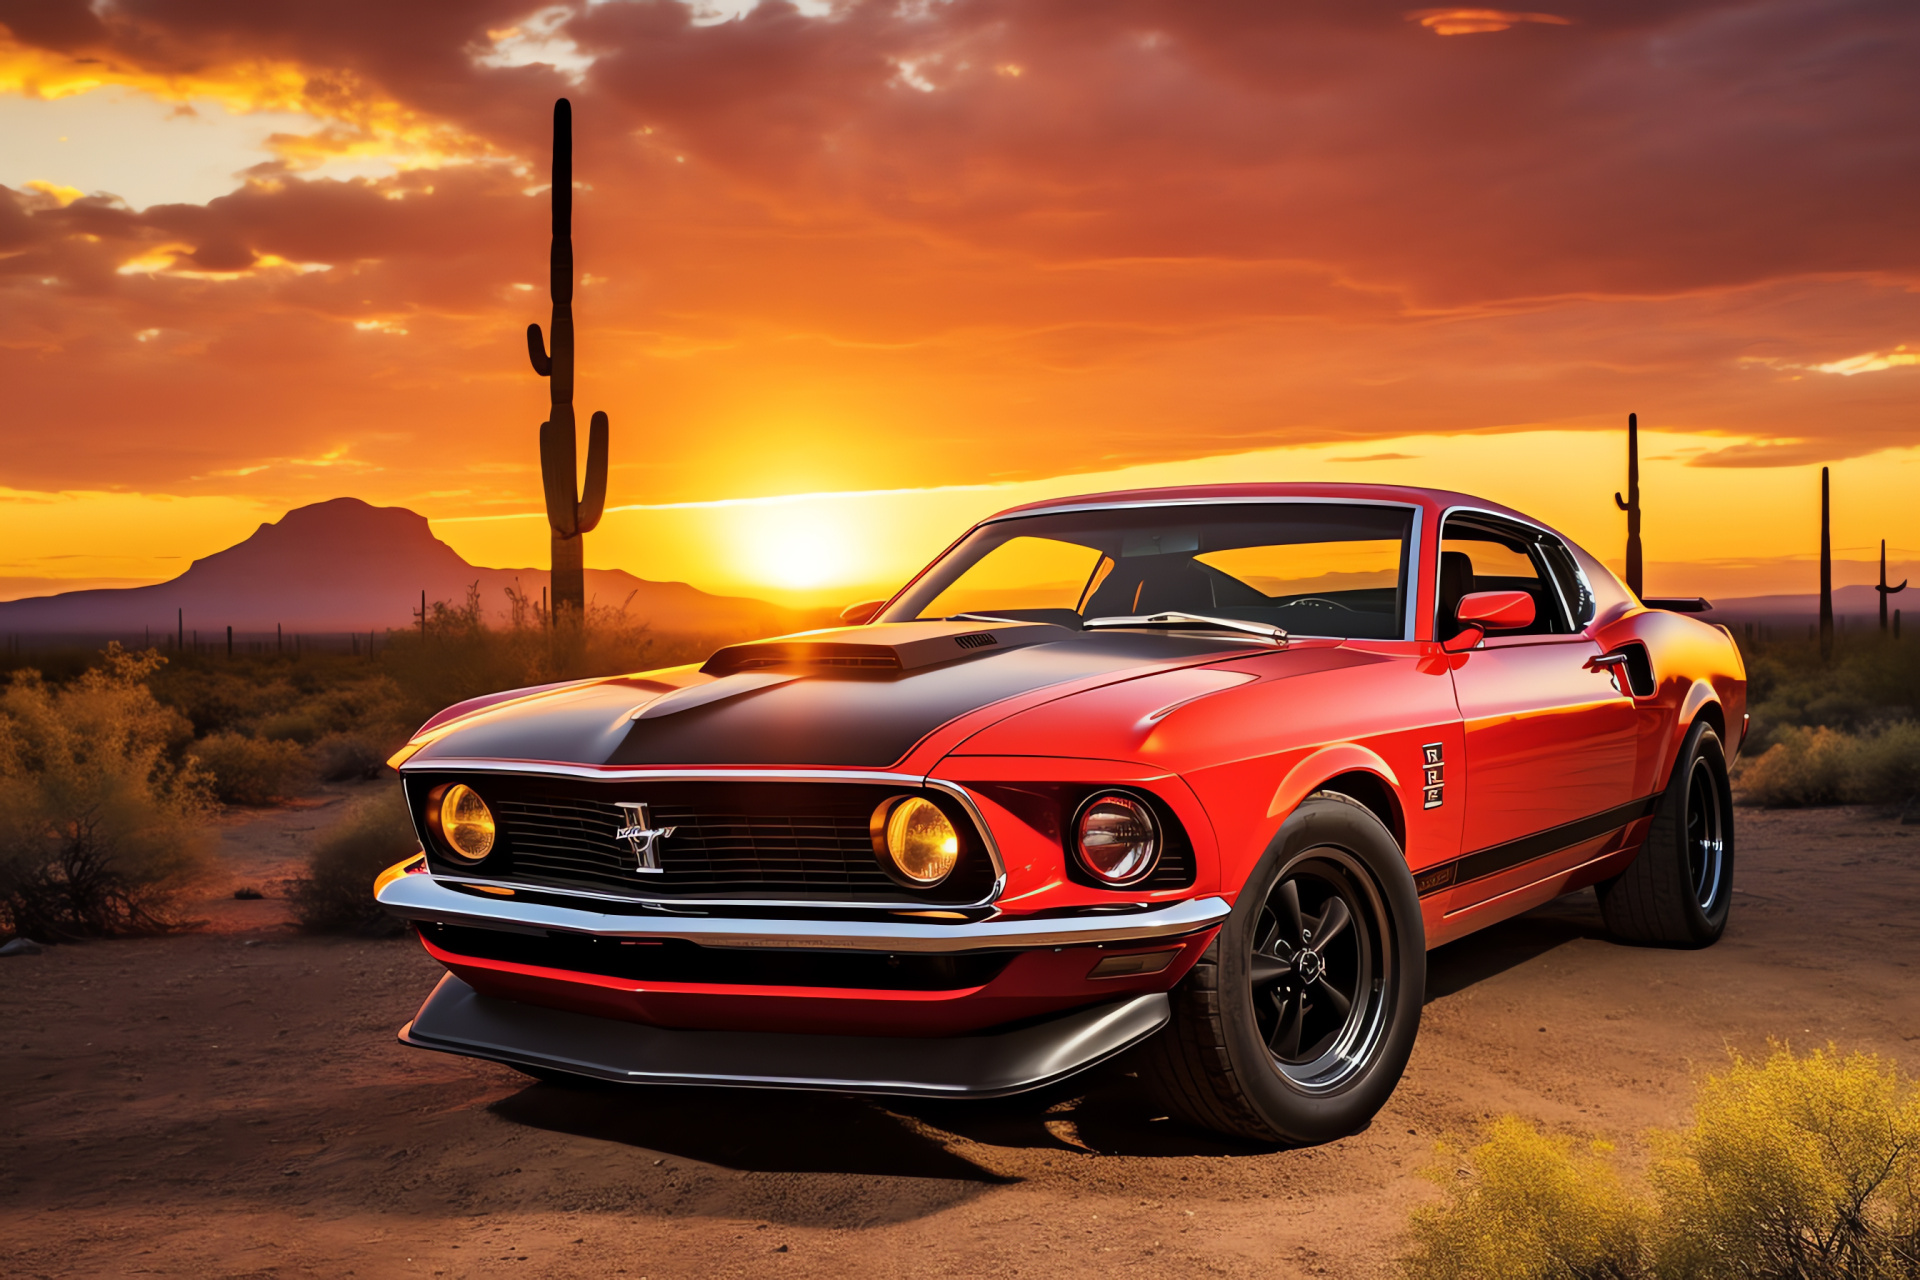 Mustang Boss 302, Historic Route 66, Desolate desert, Dusk lighting, Performance vehicle features, HD Desktop Image